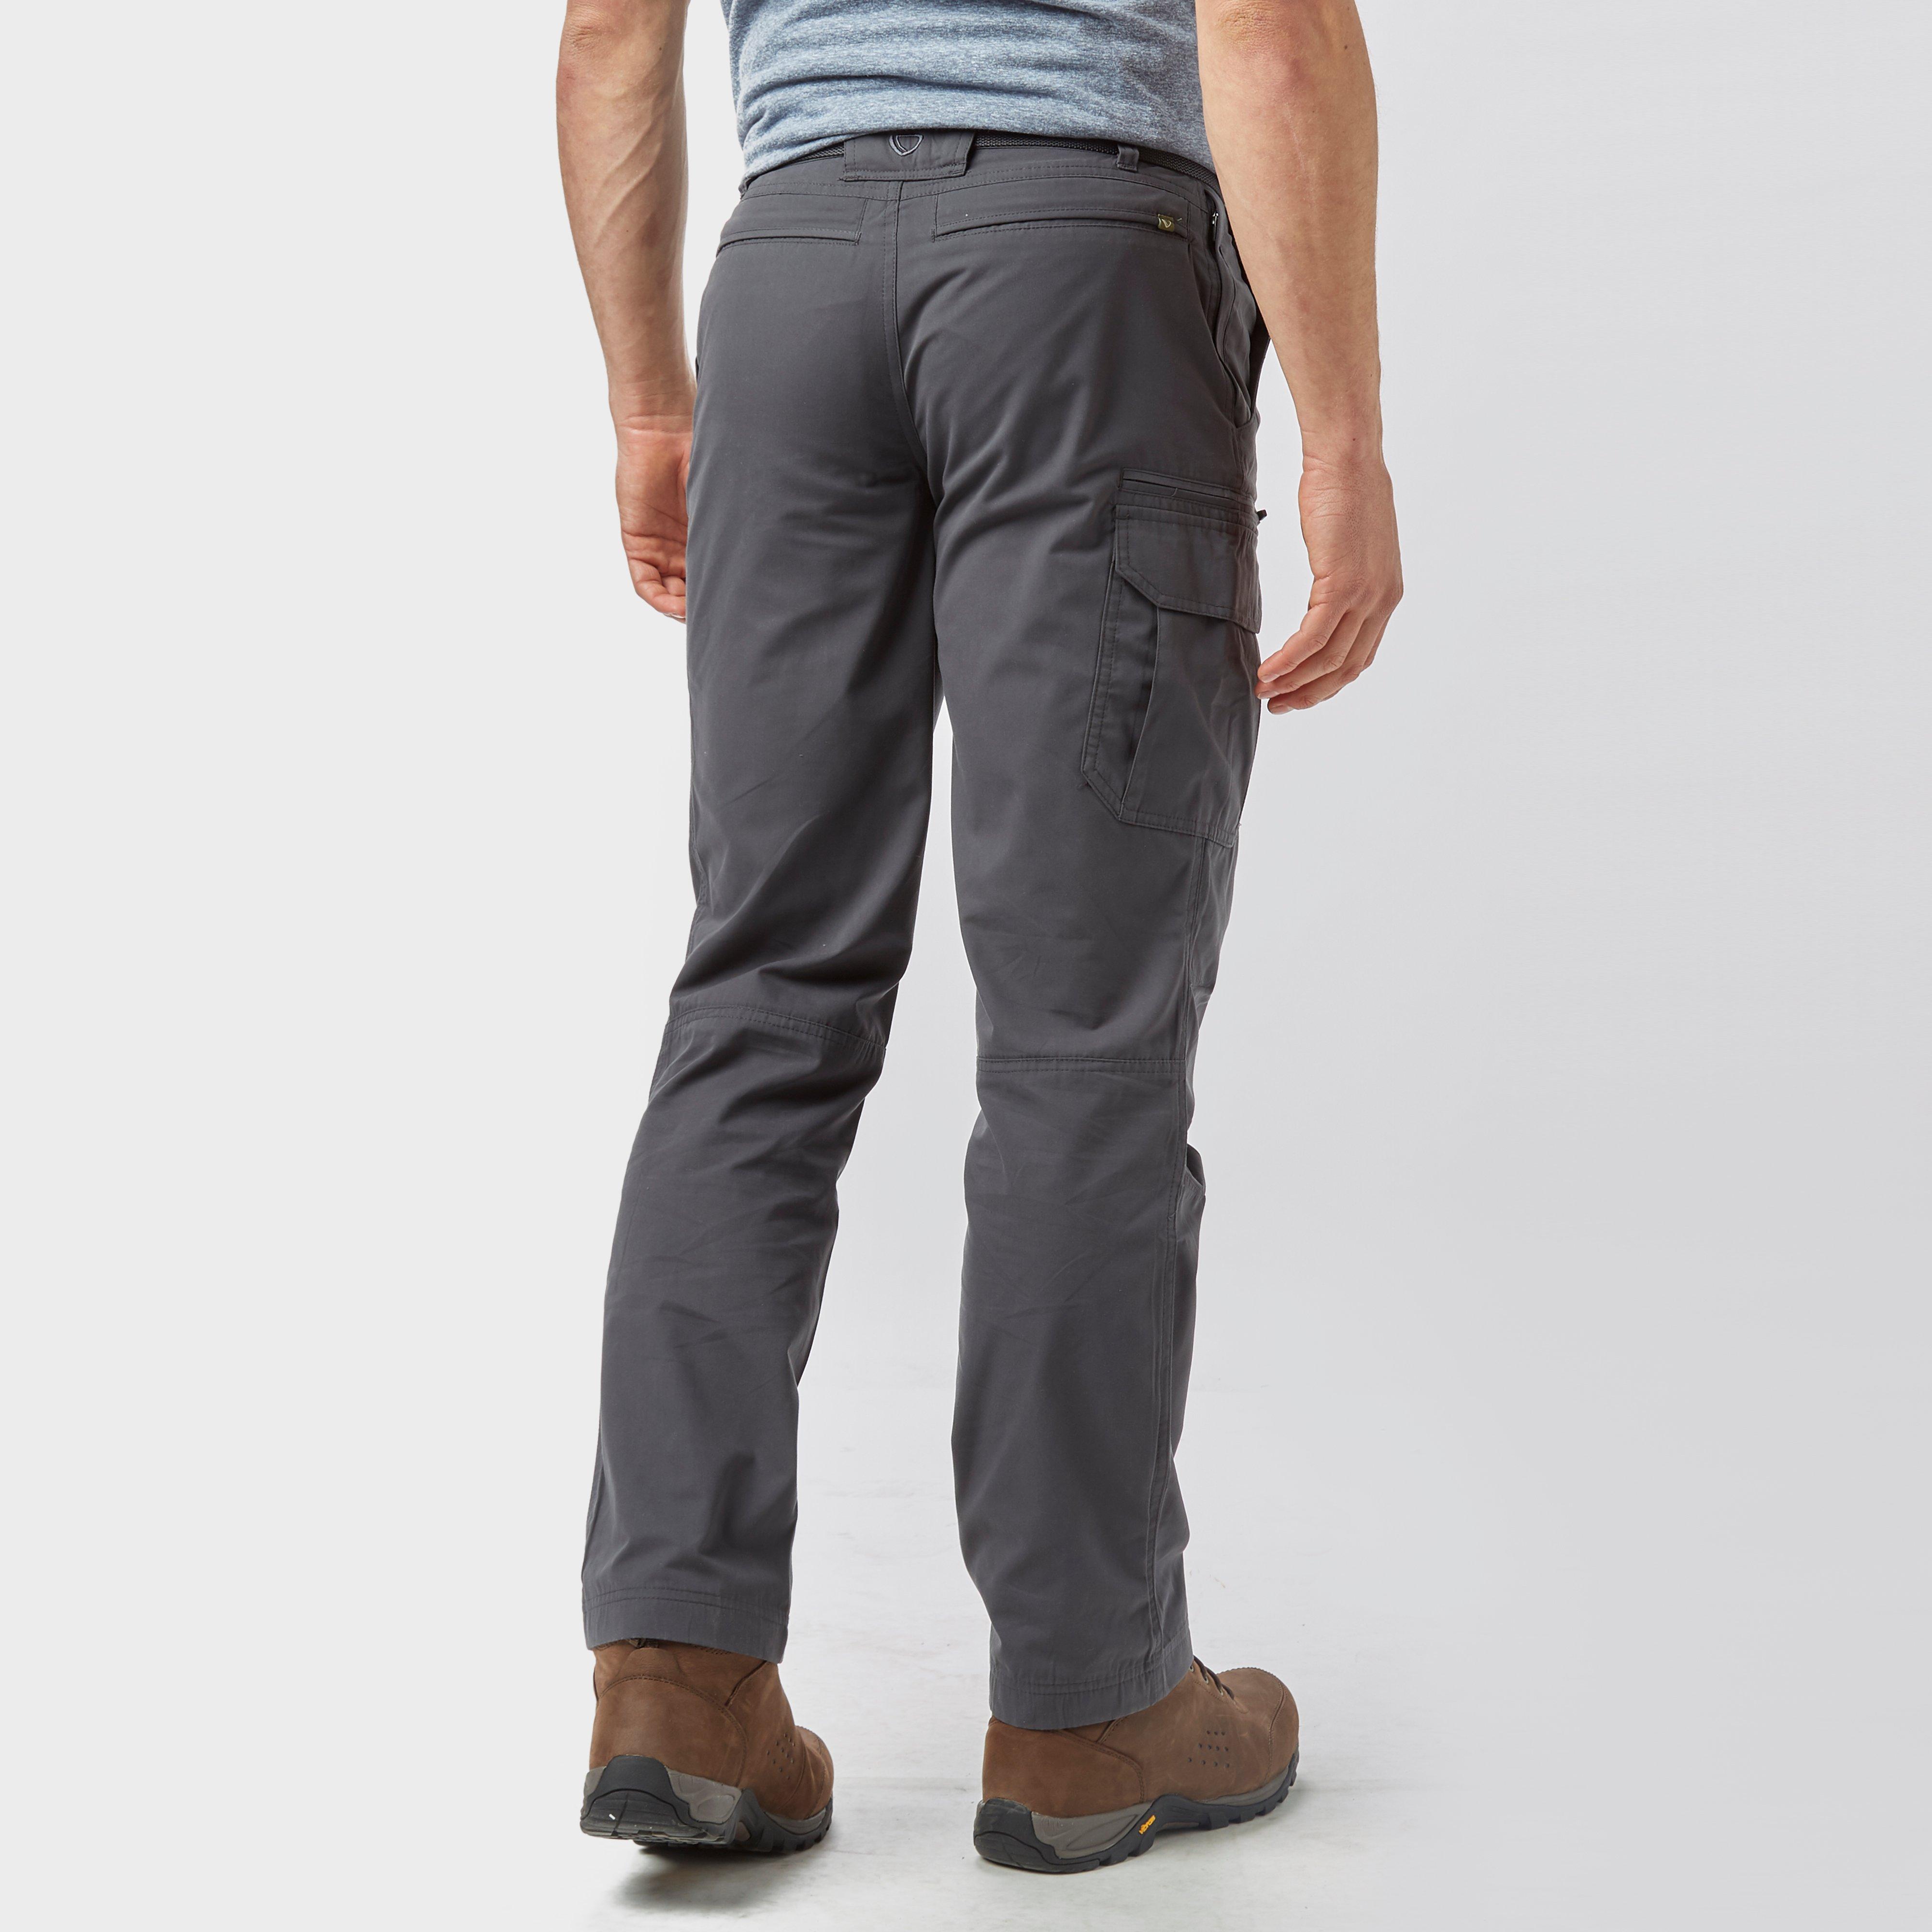 mens grey walking trousers